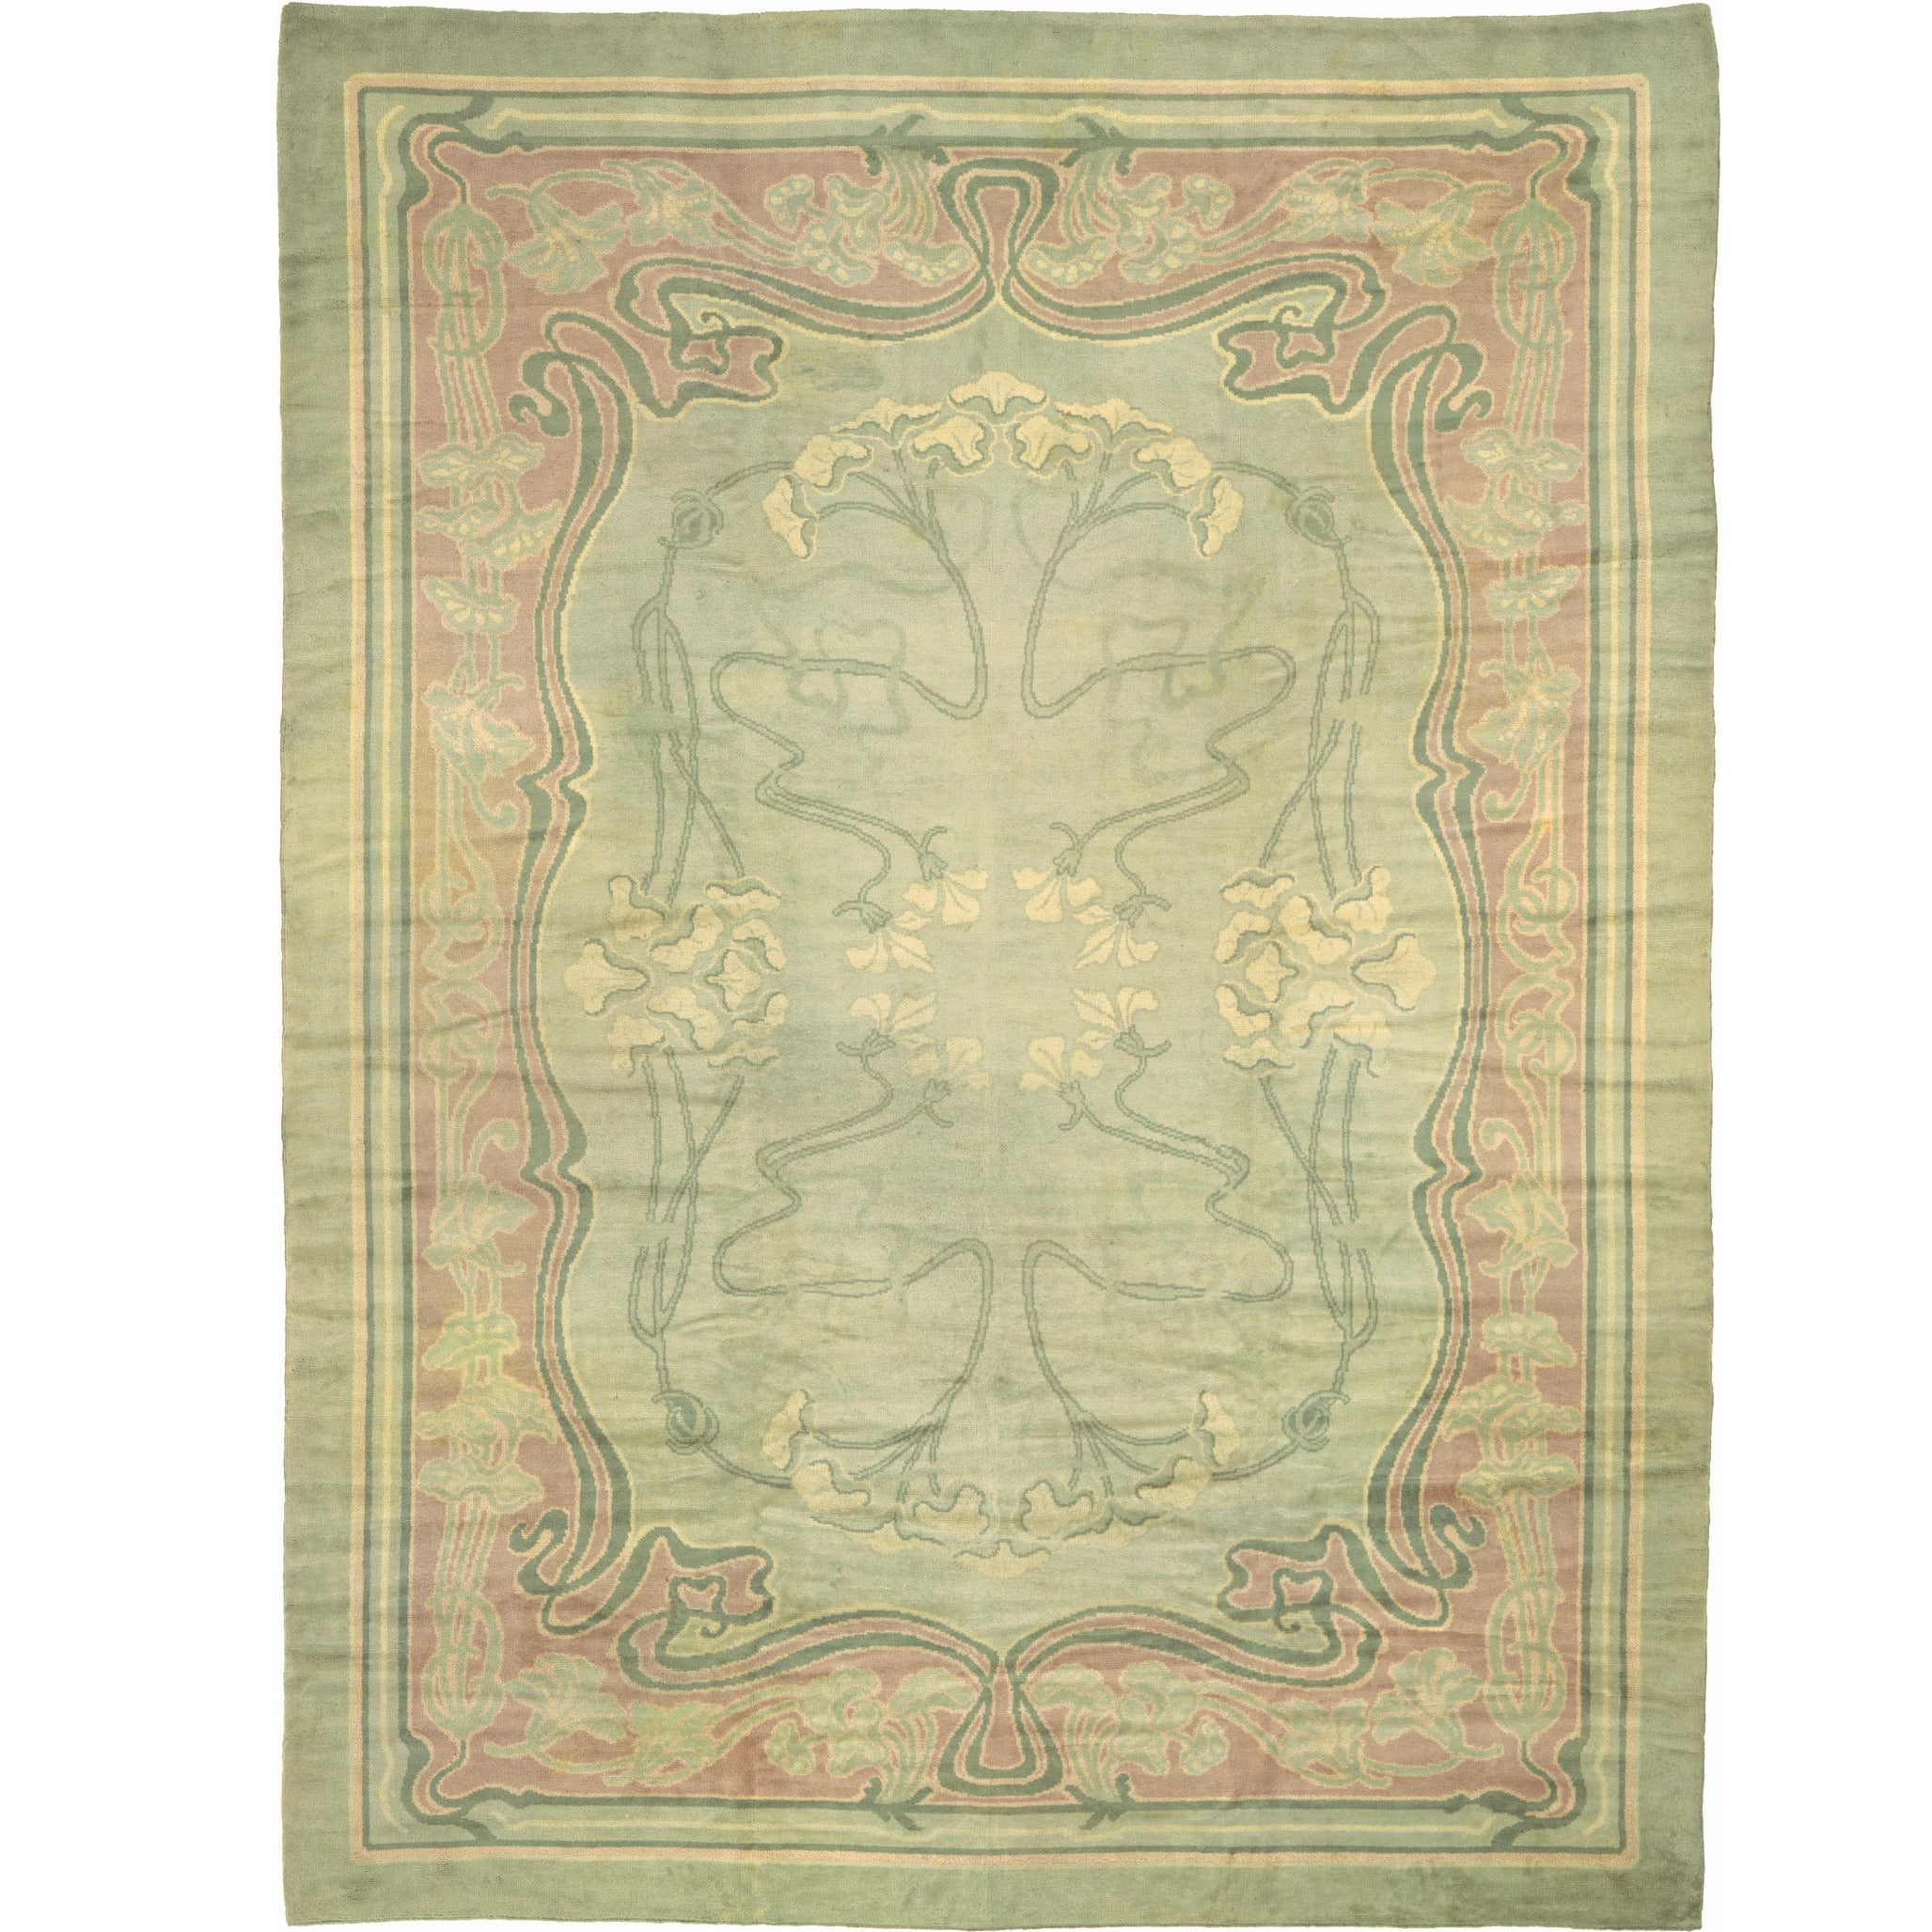 Early 20th Century Viennese Carpet, Art Nouveau Period For Sale